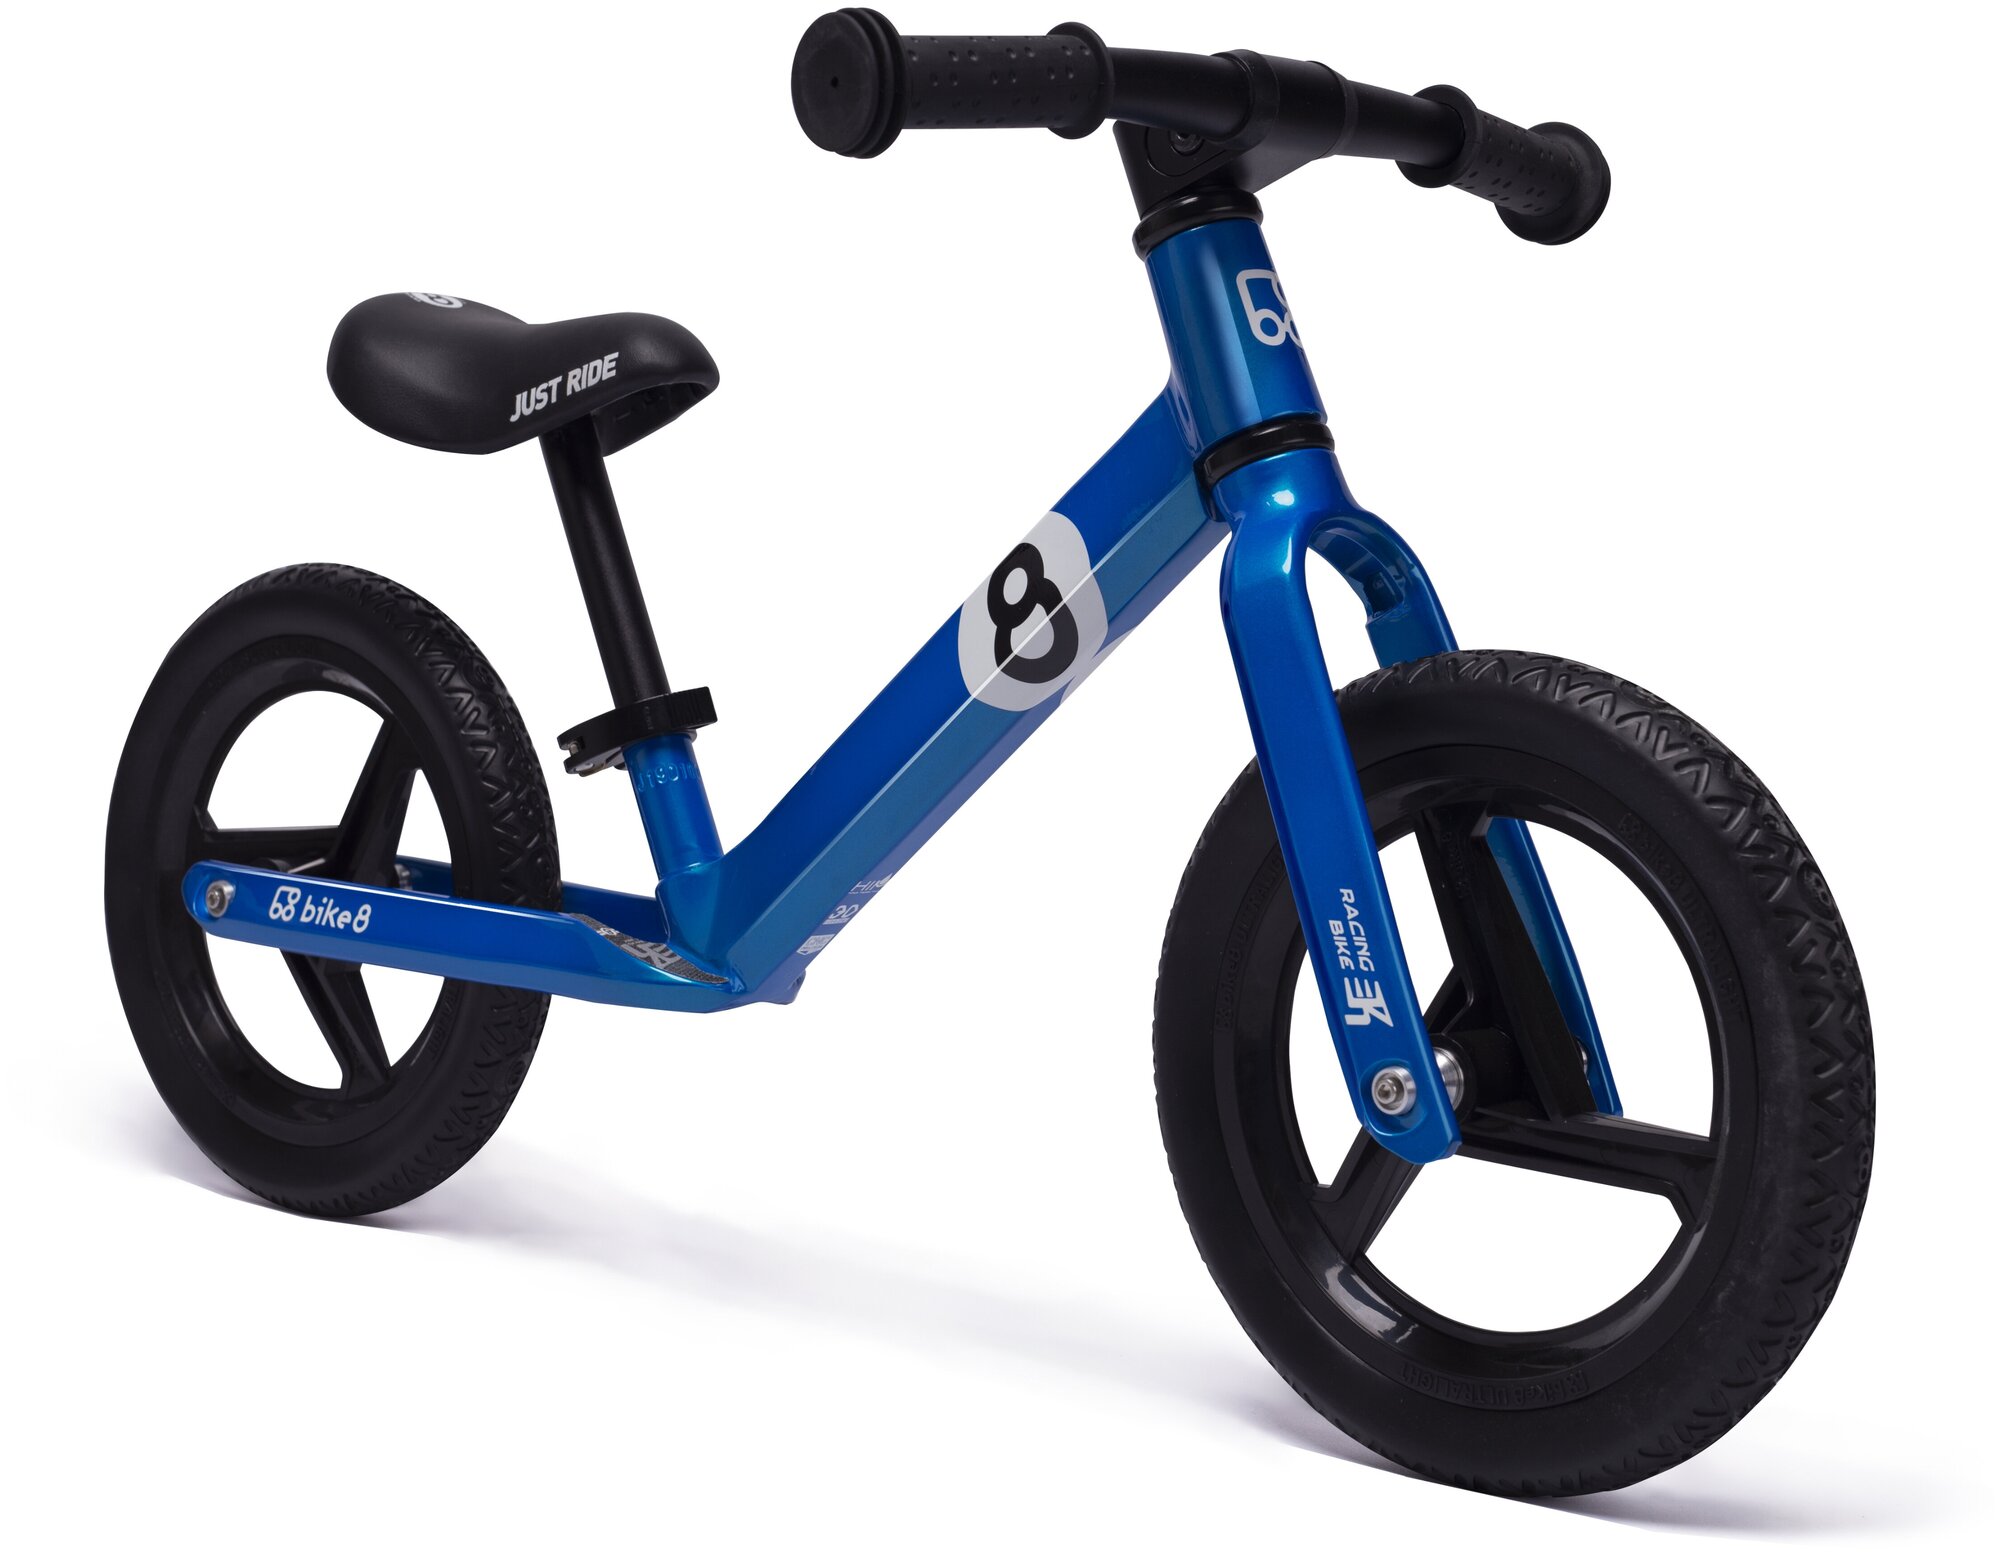 Bike8 - Racing - EVA (Blue)